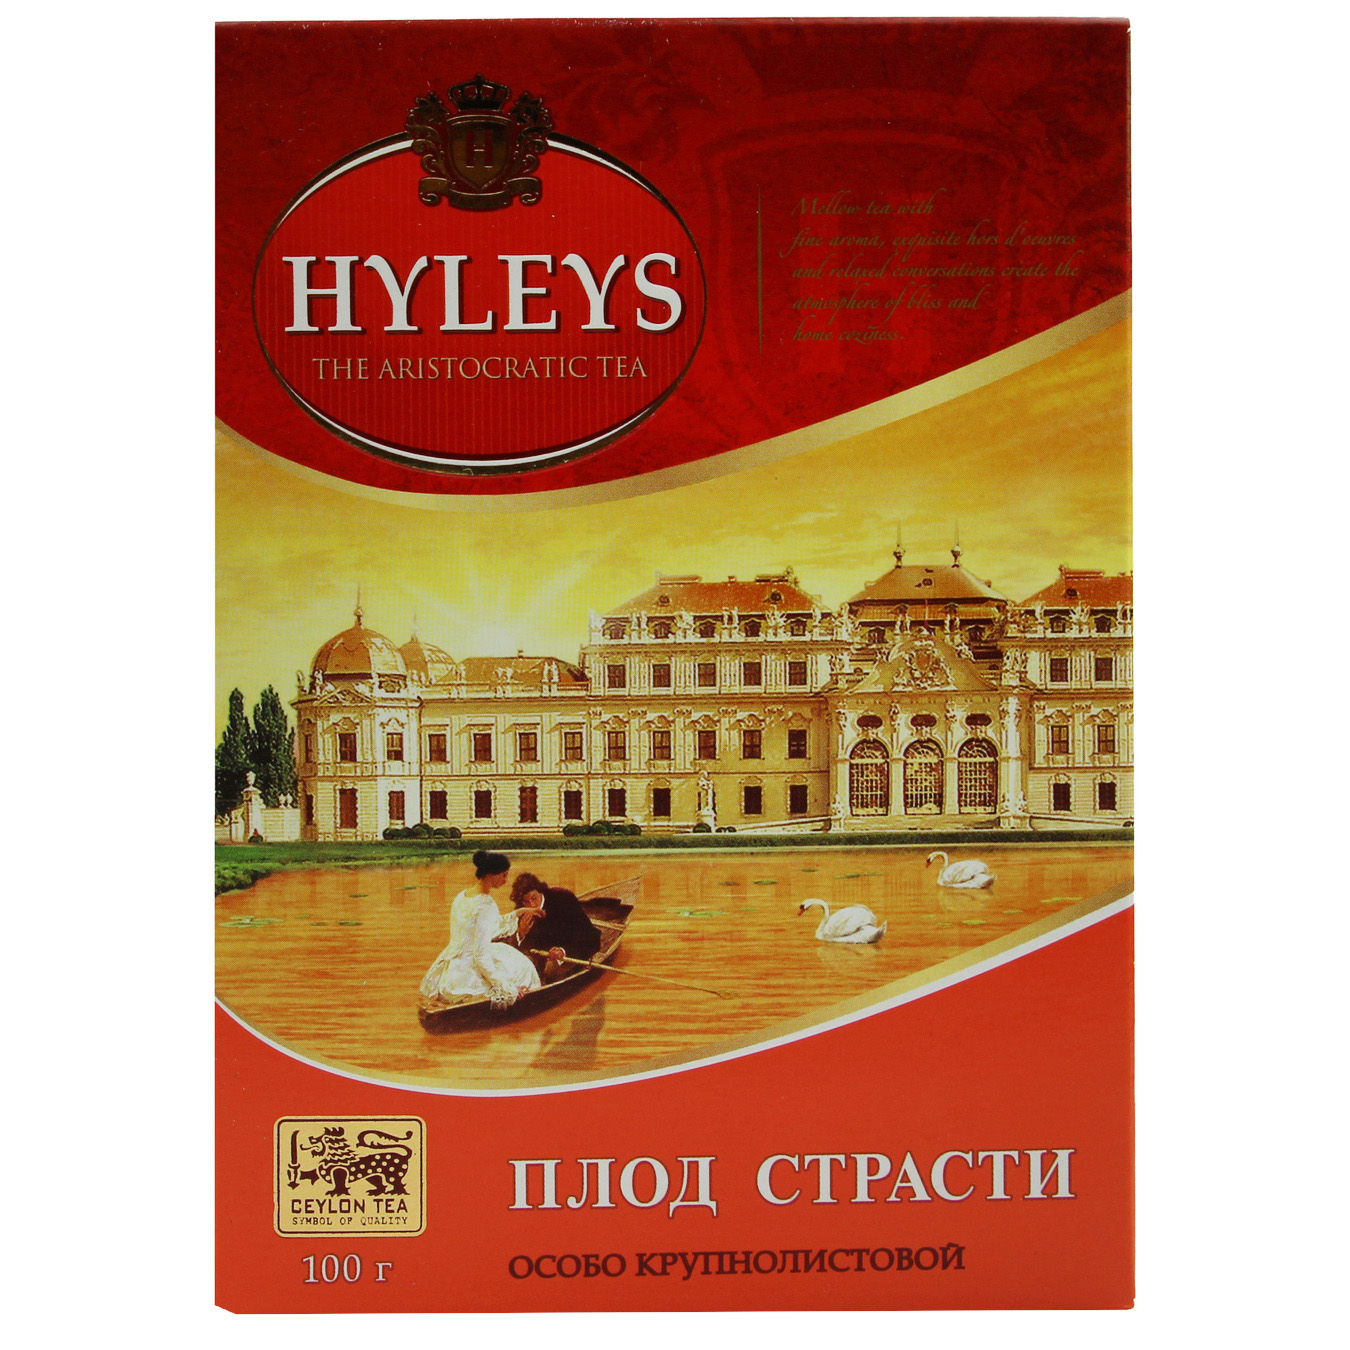 Hyleys Passion Fruit Larg Leaf Black Tea 100g